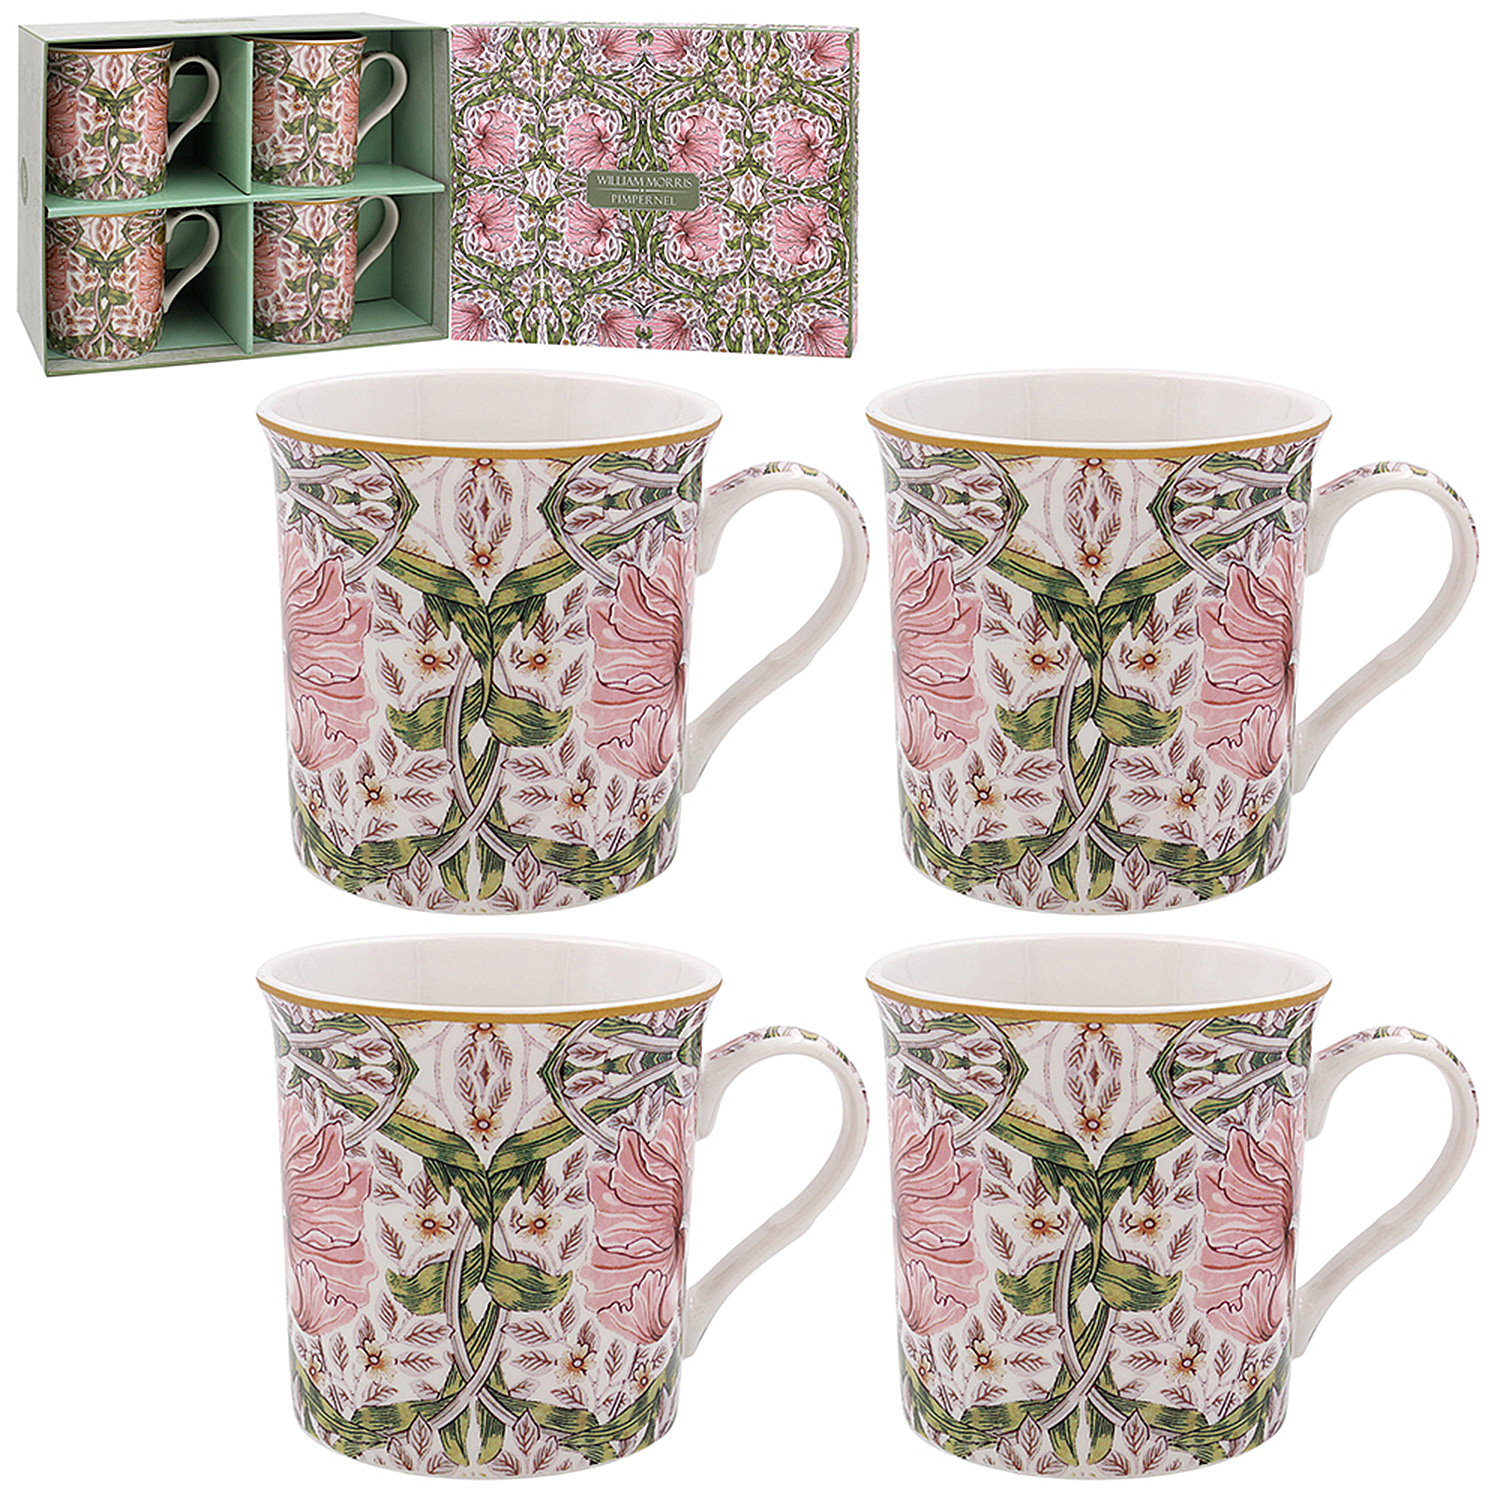 Coffee-Travel-Mug-and-Tea-Cup-Size-1x1x1-cm-Multi-Color